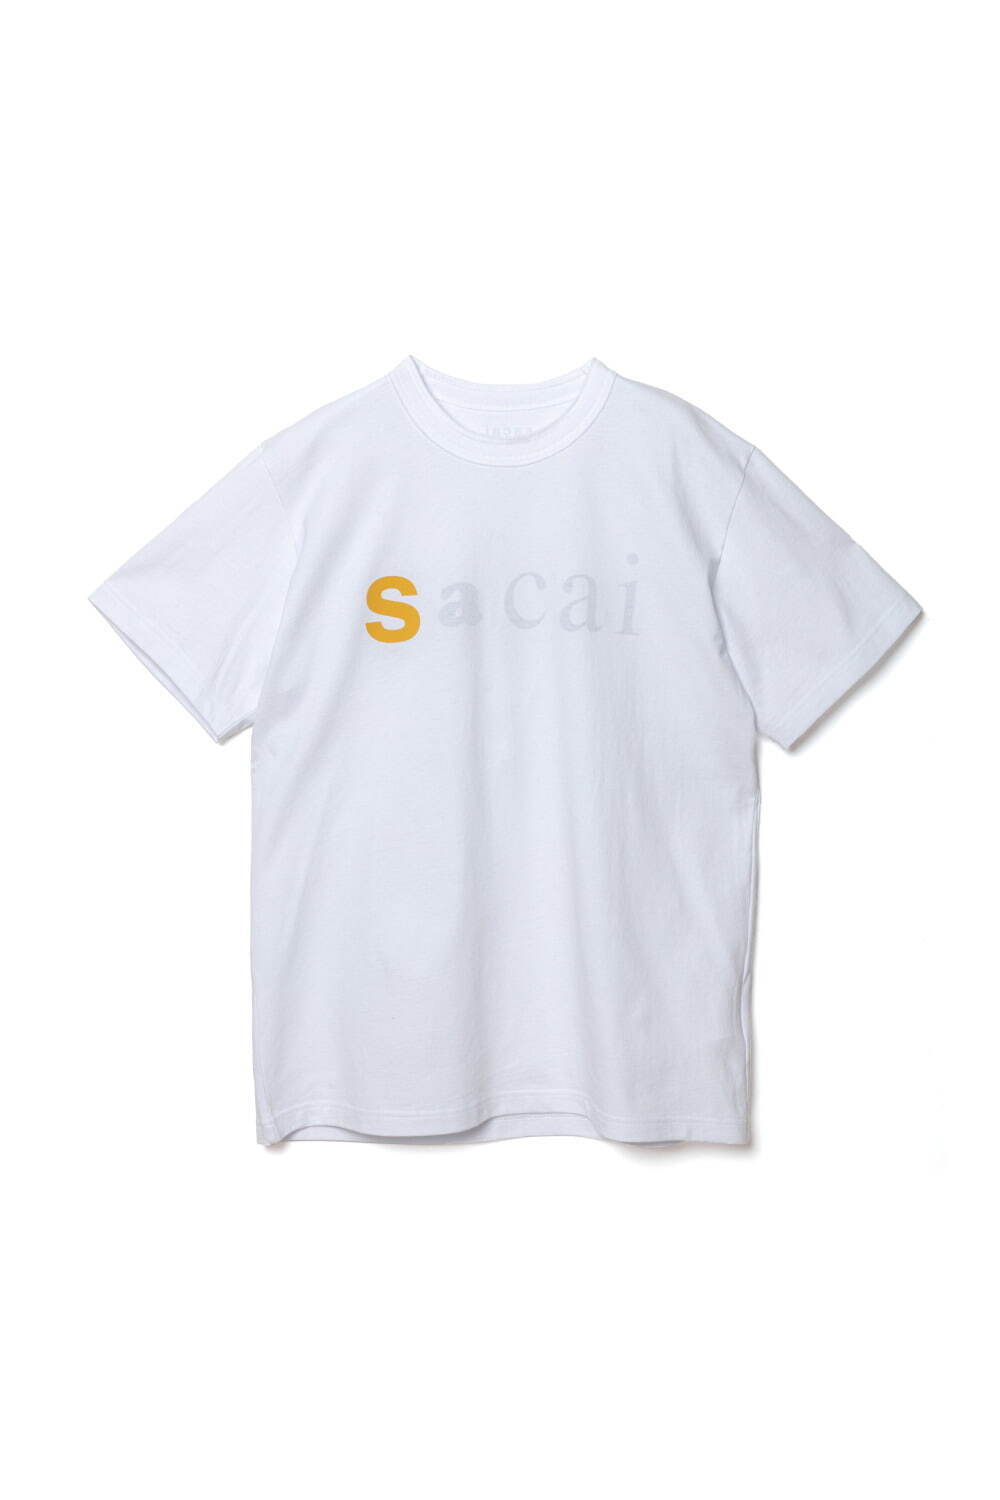 Sacai Carhartt 直営店限定Tシャツネイビーサイズ2ステッカー付き